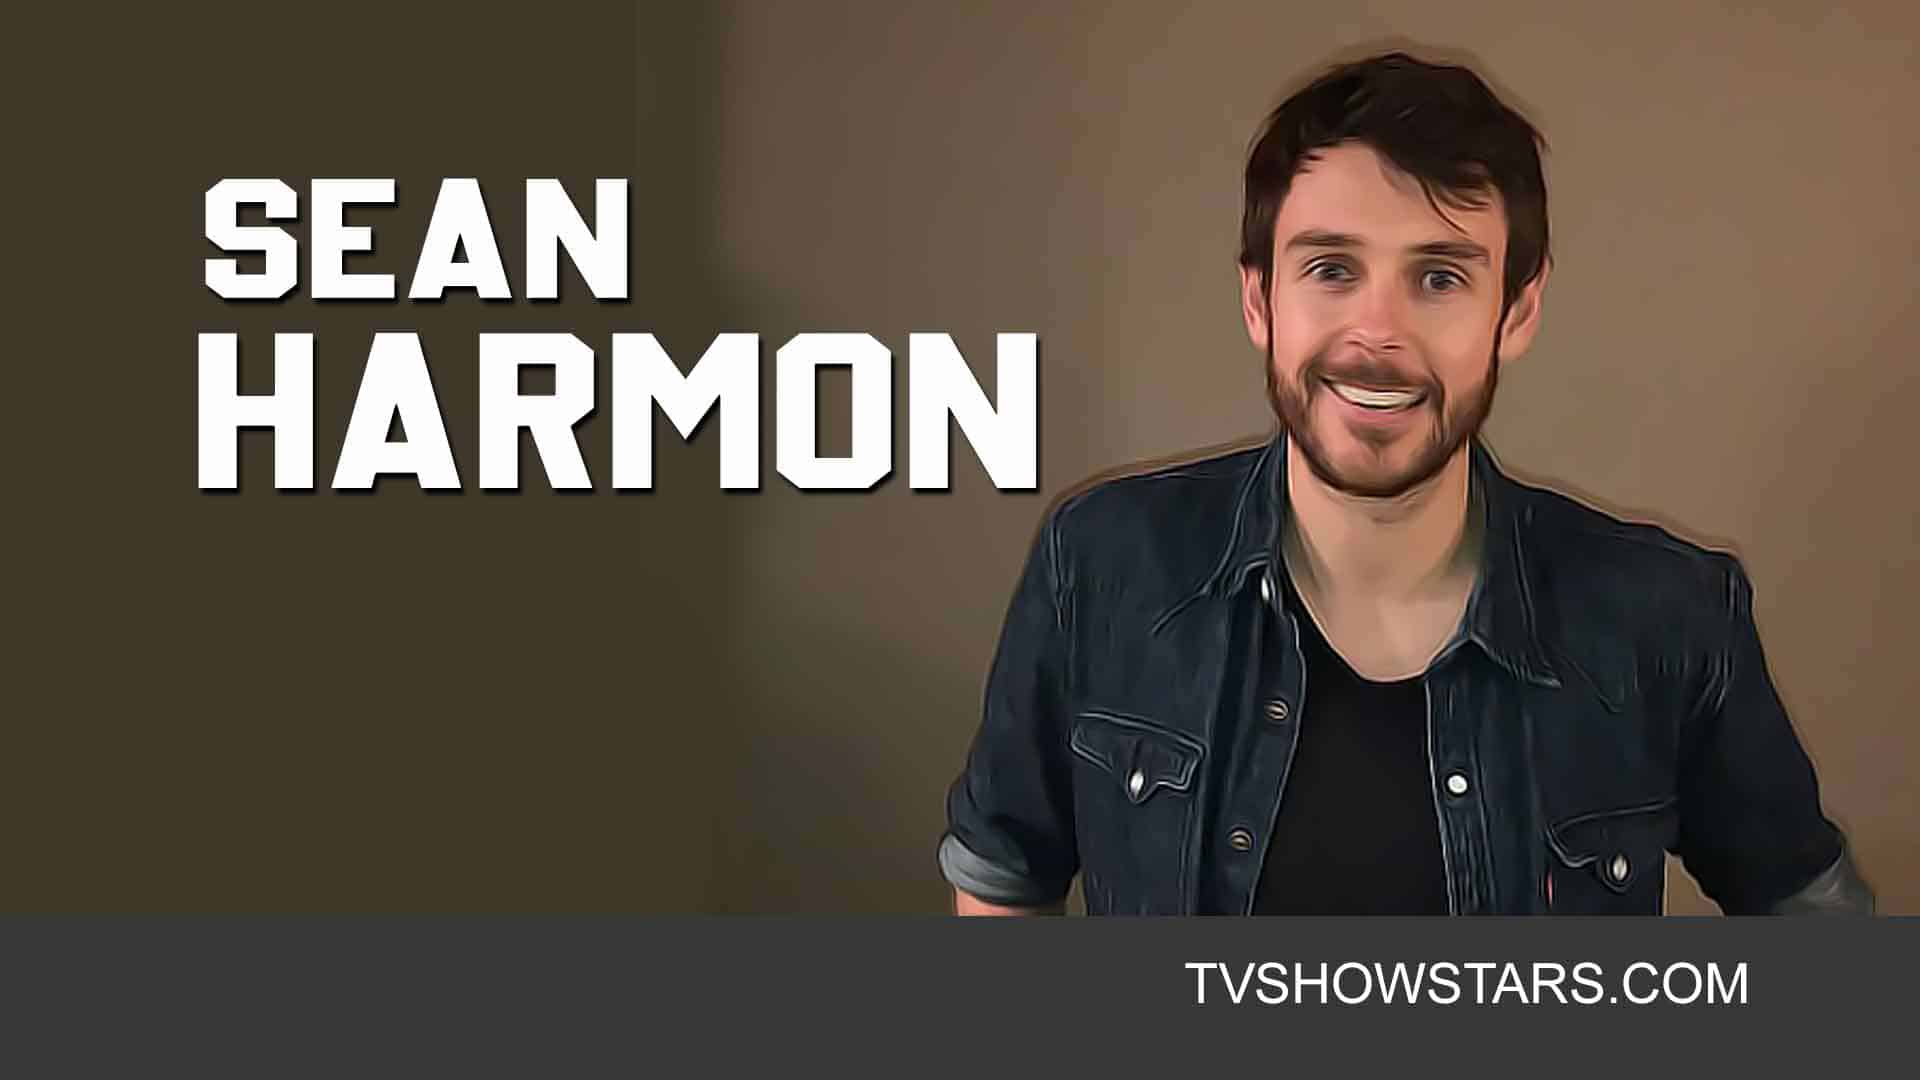 Sean Harmon